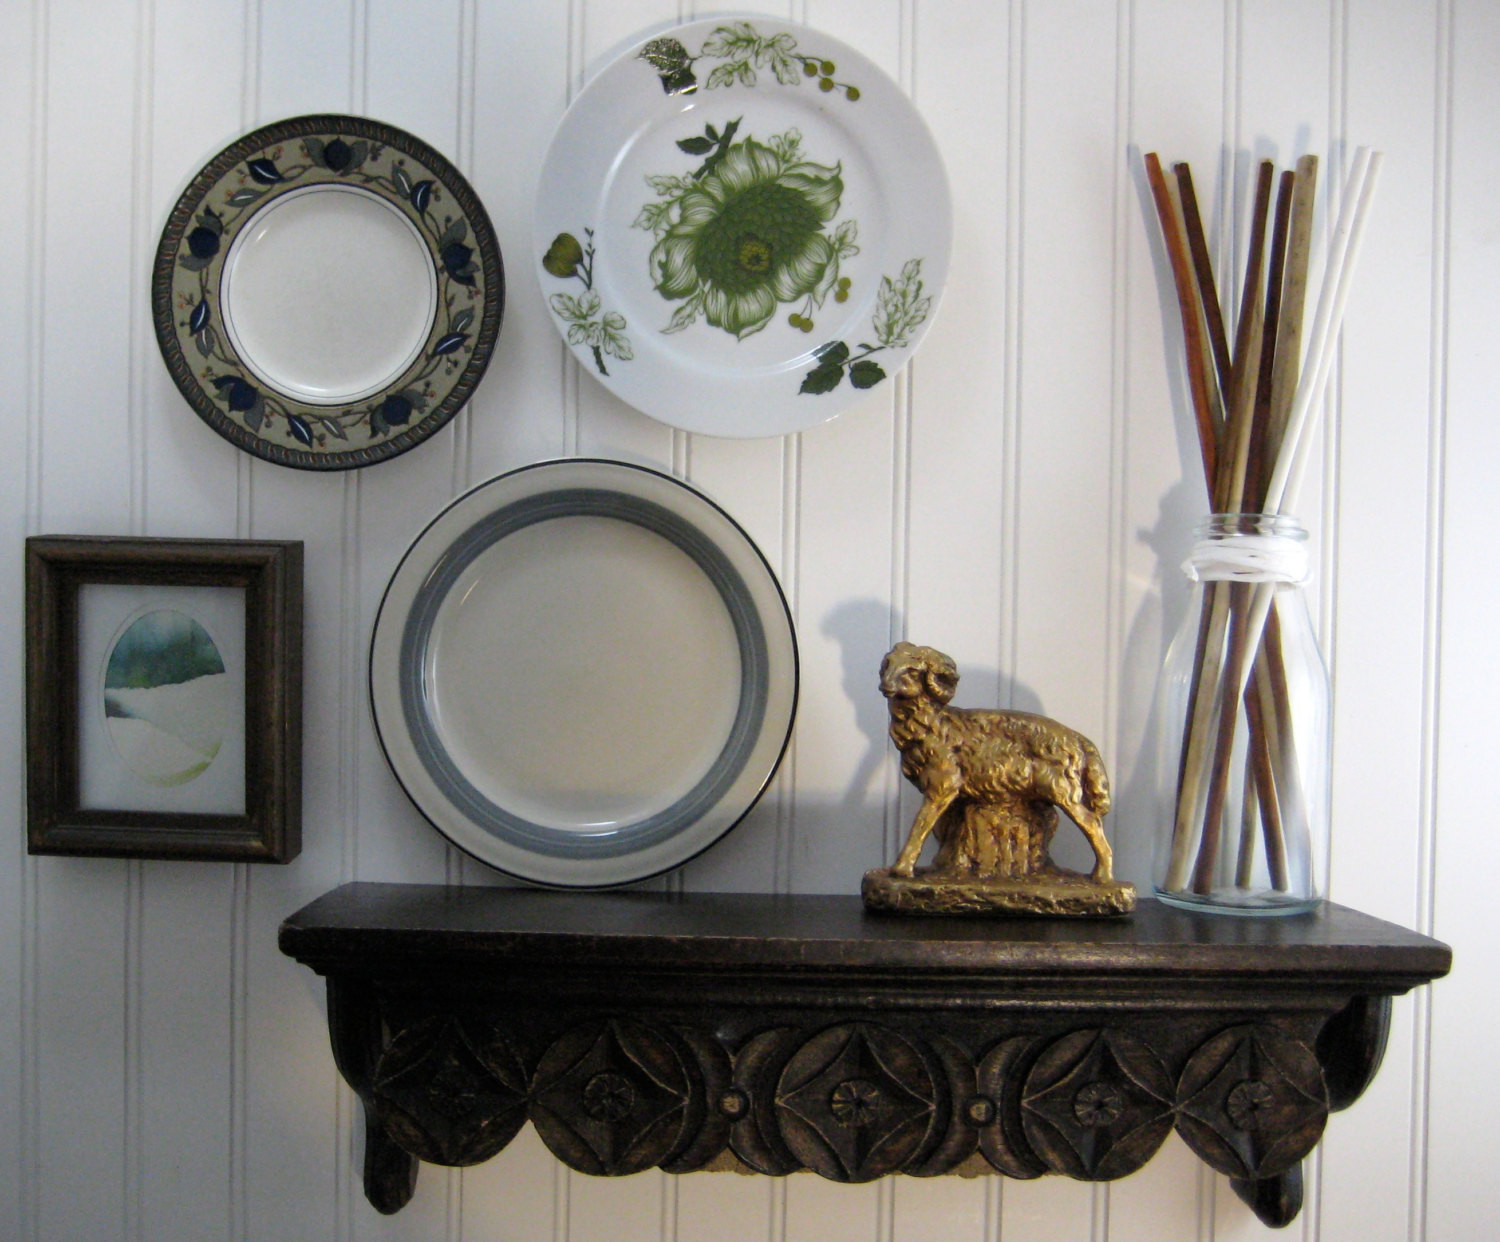 Decorative Plates For Kitchen Wall
 Decorative Plates Kitchen Wall Decor Vintage Mismatched